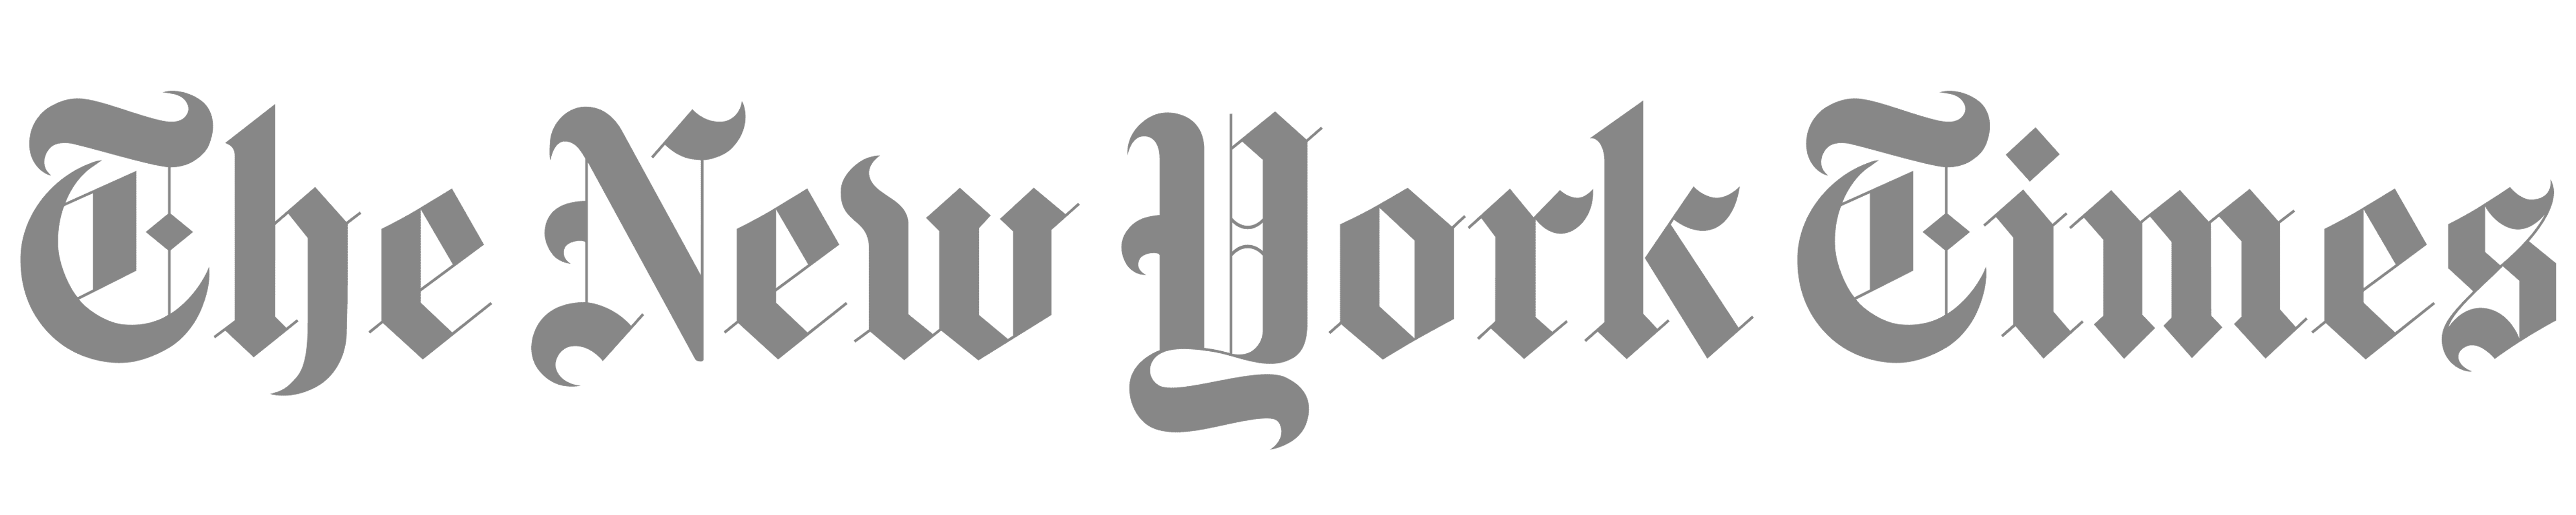 New York Times Logogs